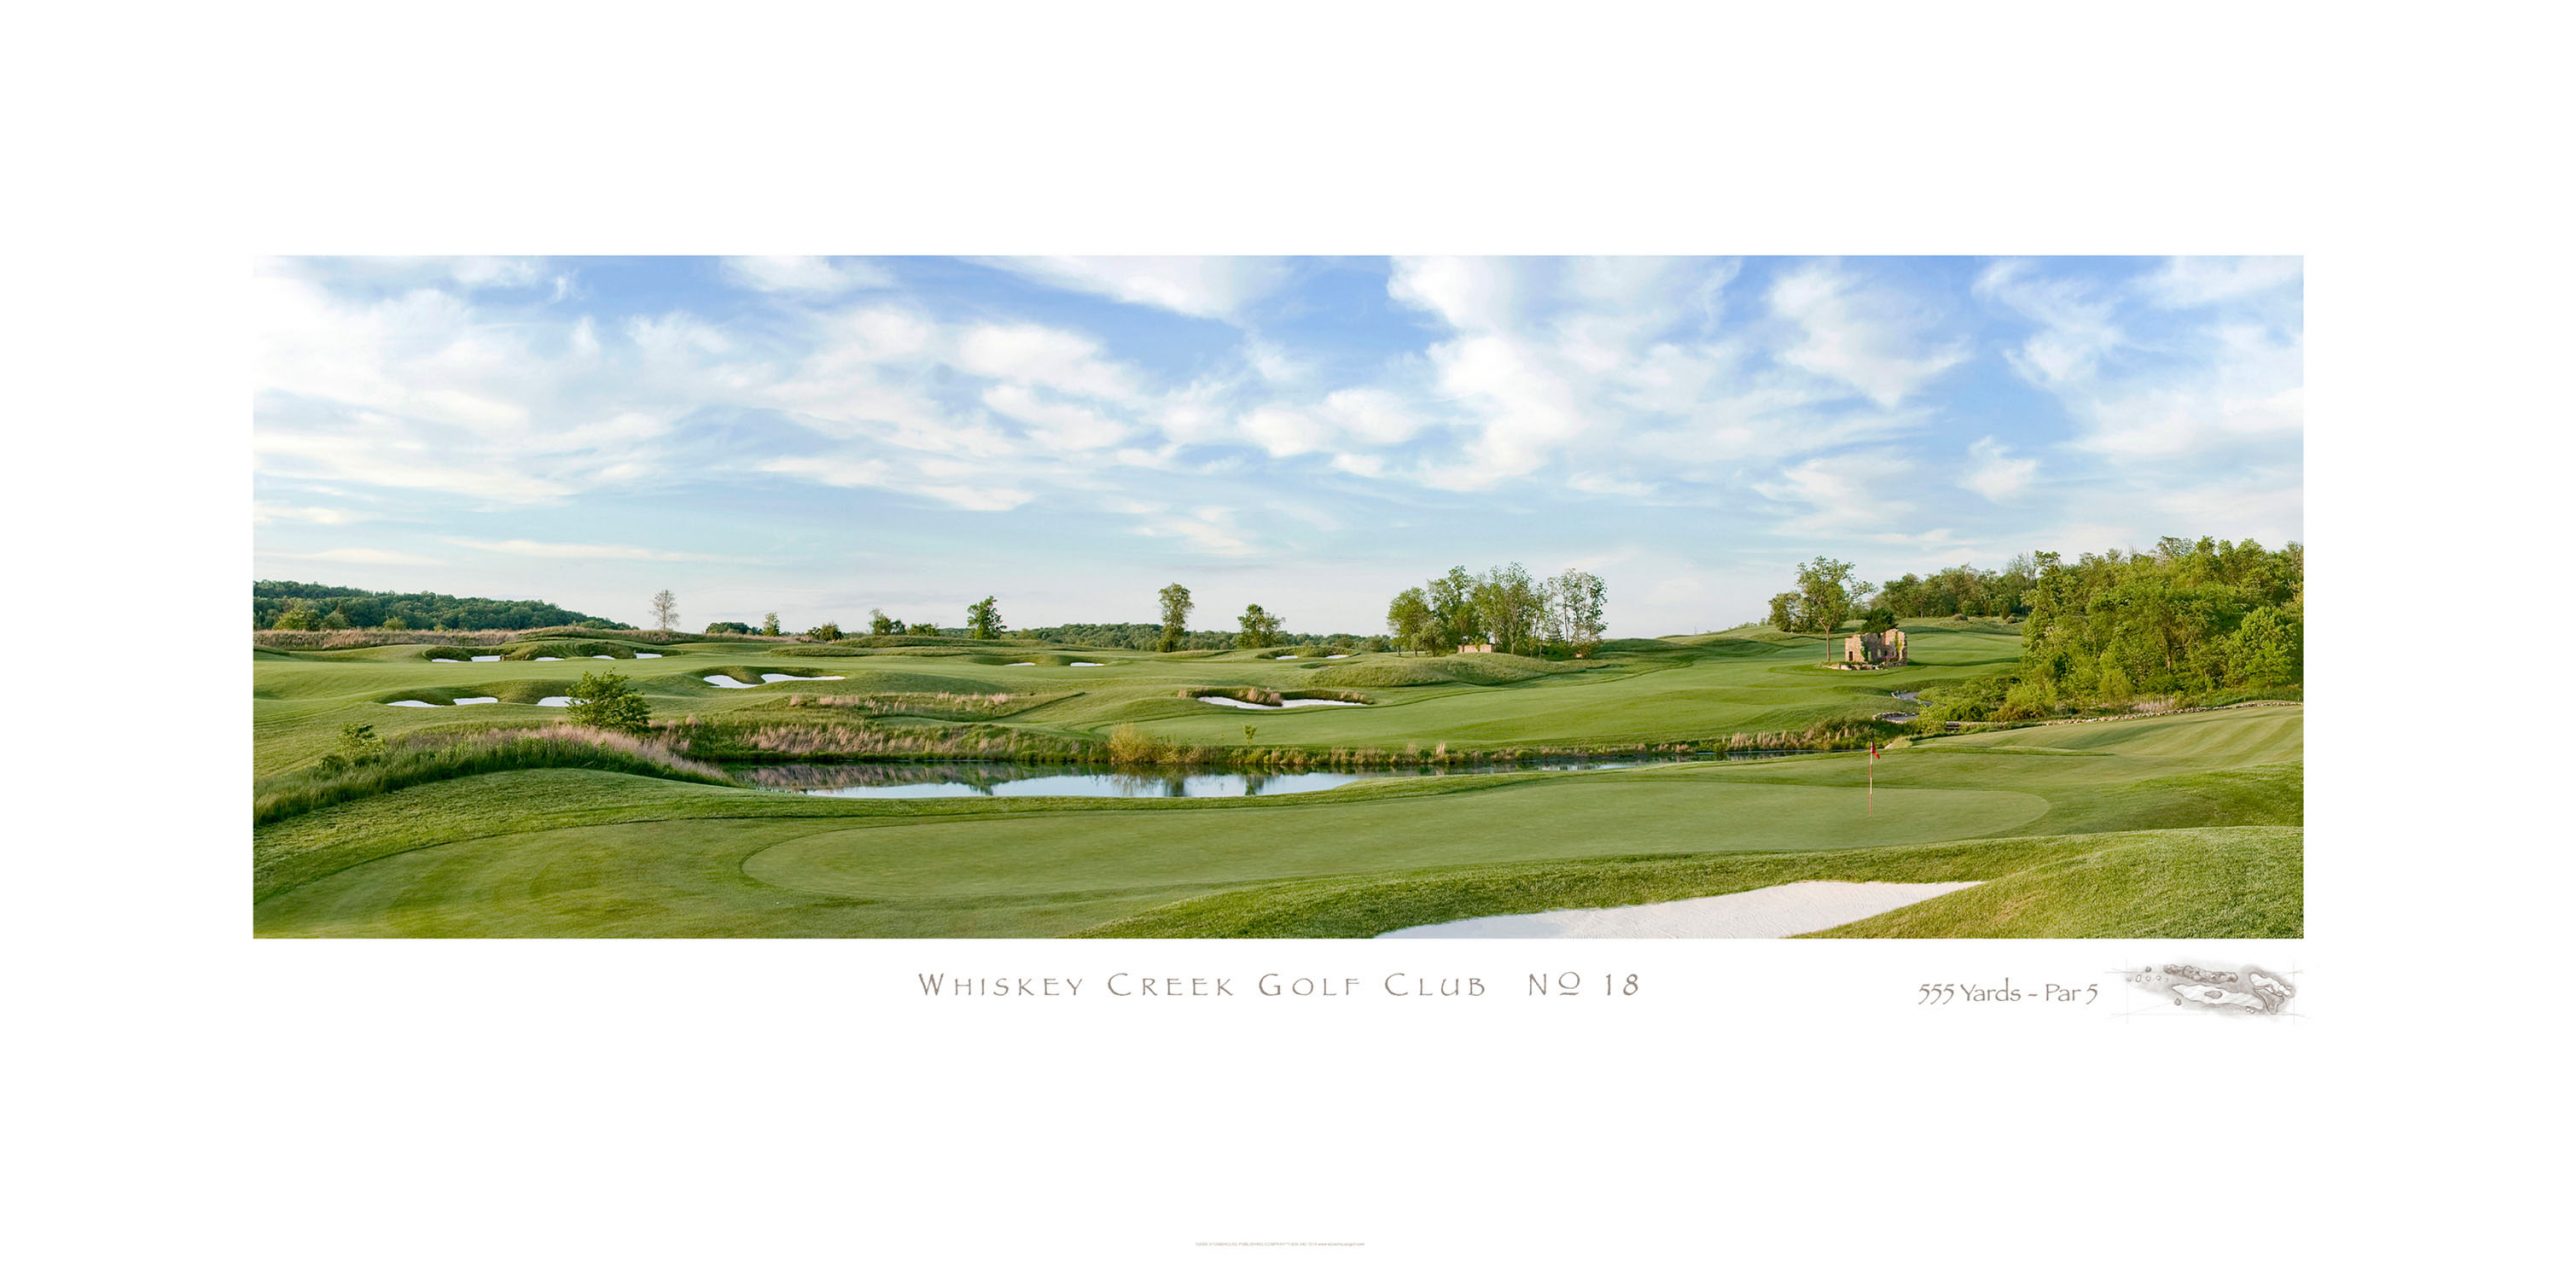 https://www.stonehousegolf.com/wp-content/uploads/2019/05/whiskey-creek-golf-club-no-18-scaled.jpg